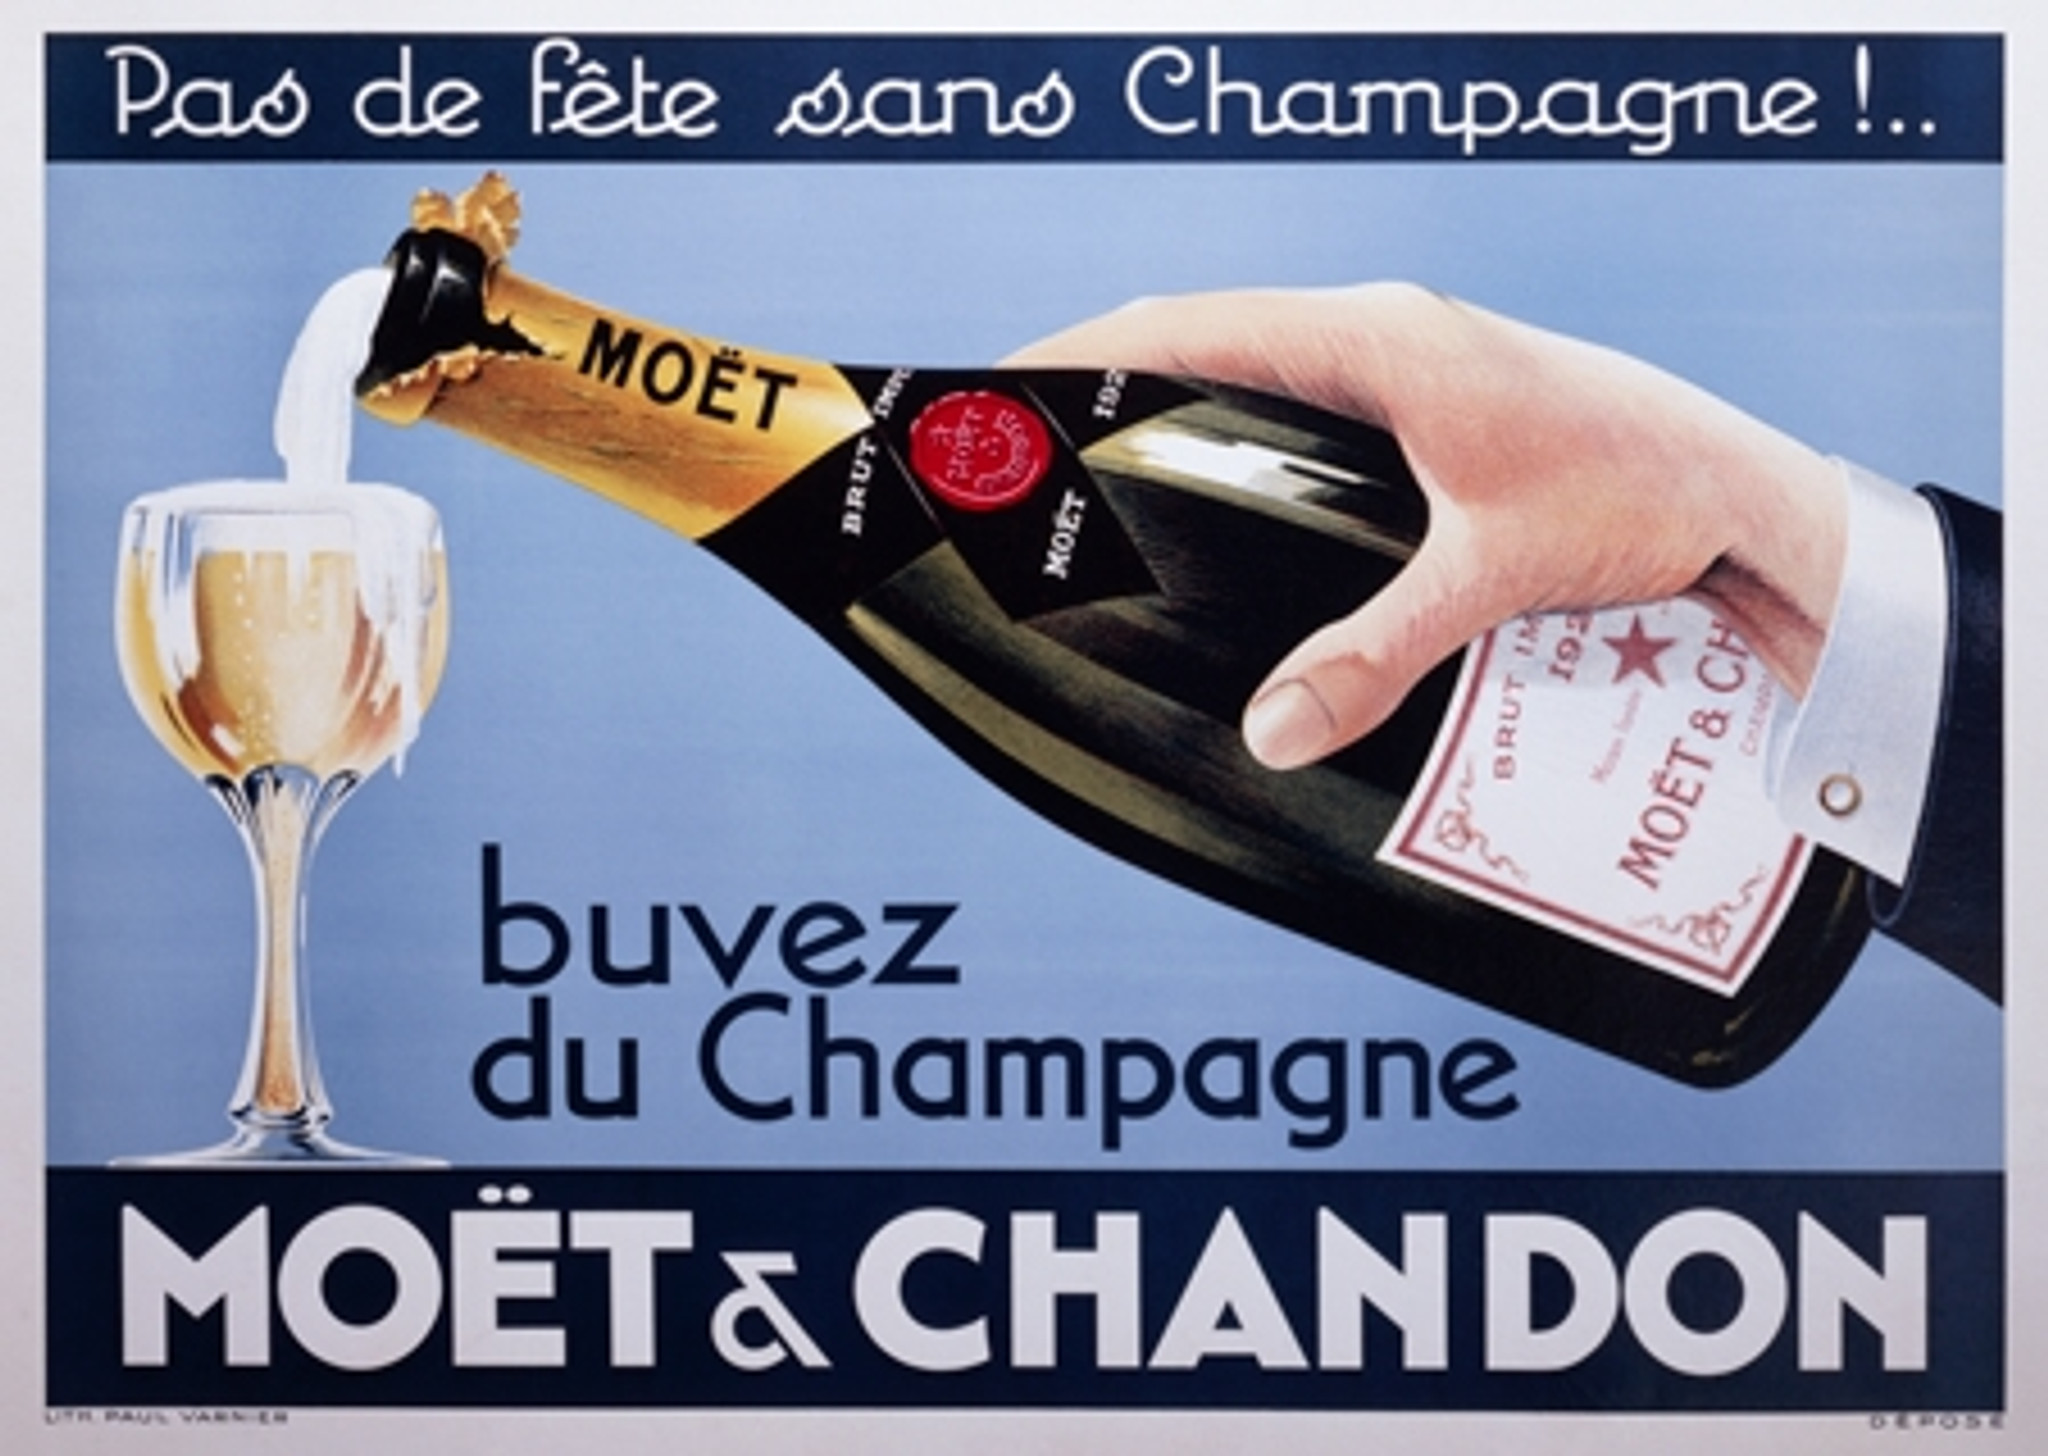 & chandon champagne